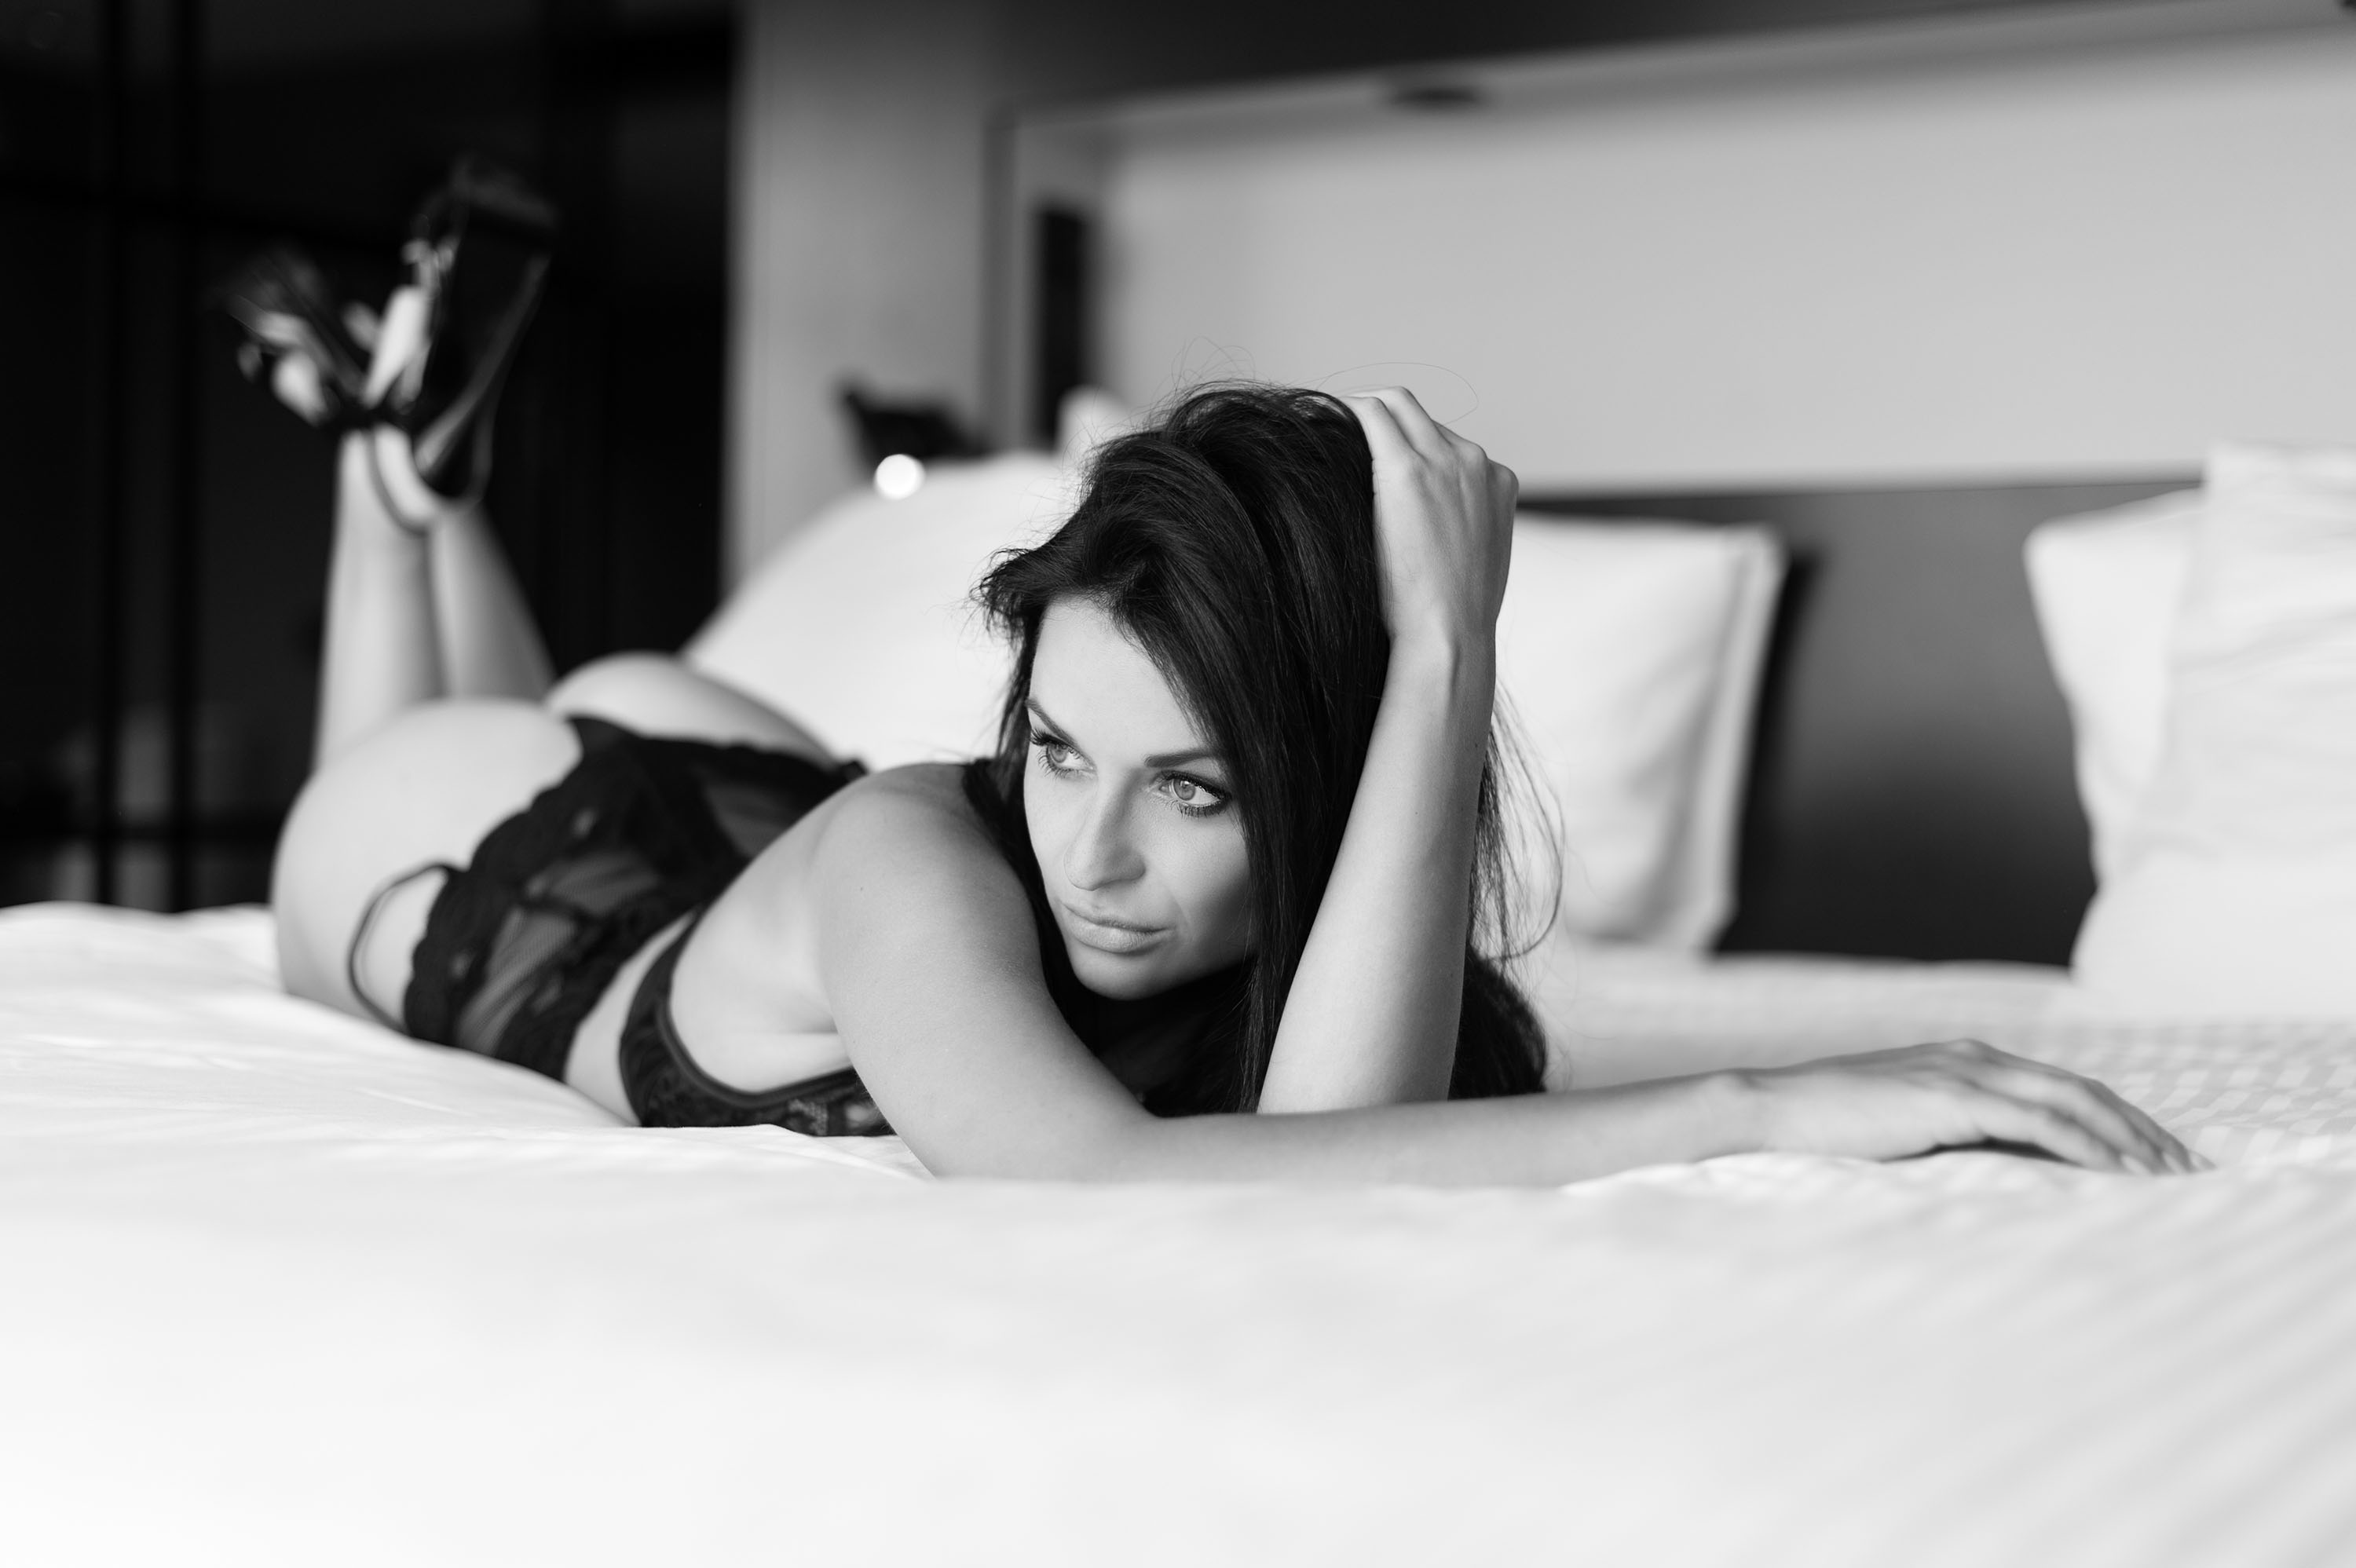 Xenia Inez, model from Belgium at a boudoir photoshoot